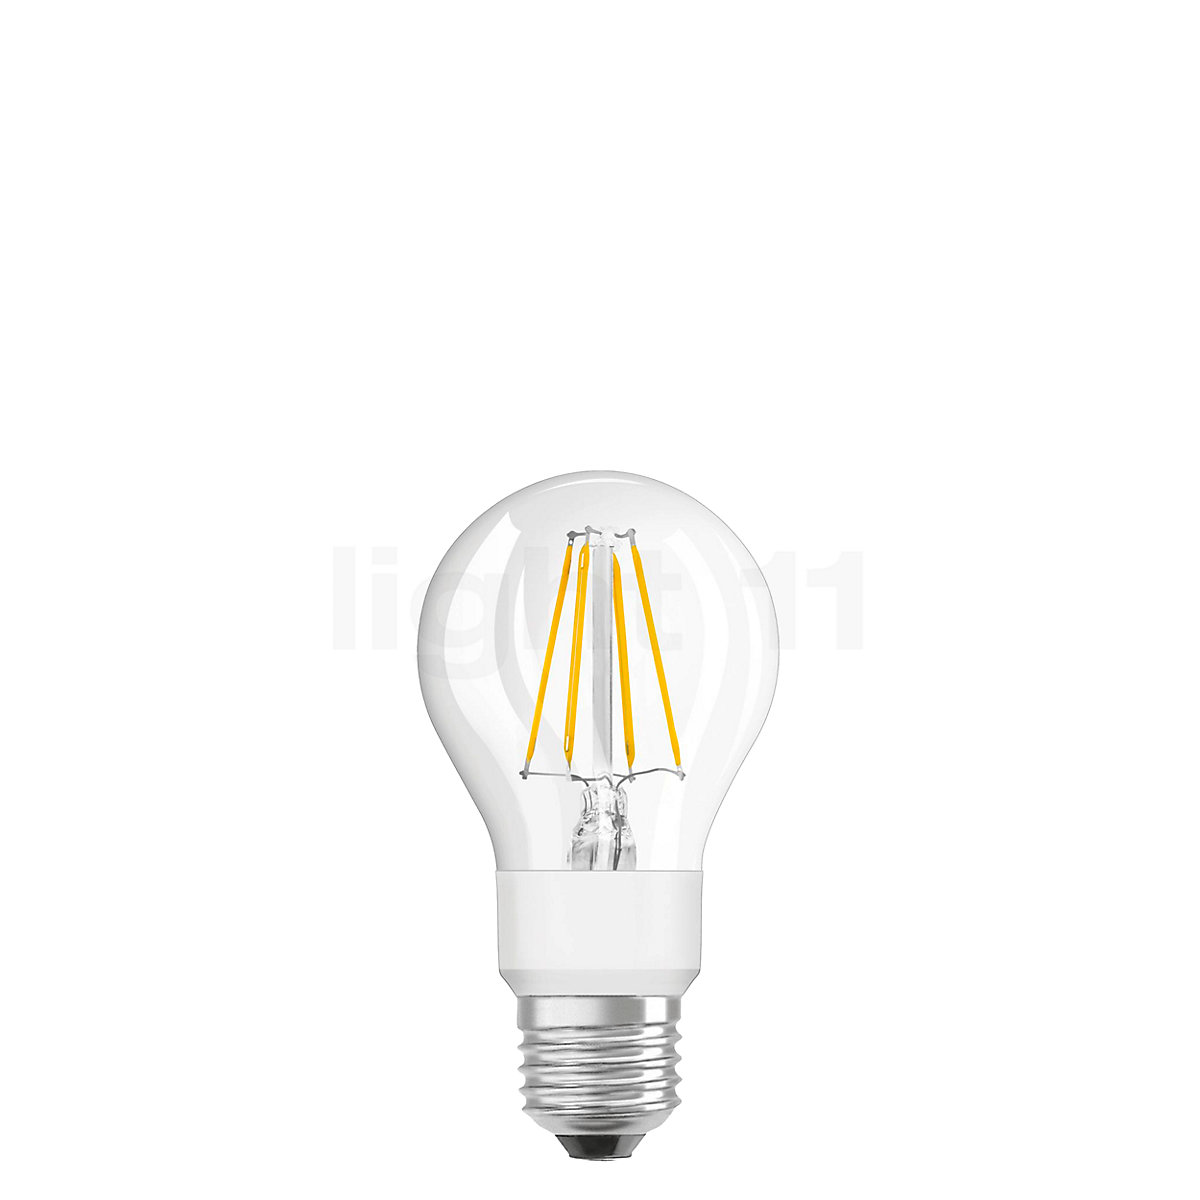 correct jukbeen Rechtsaf Buy Osram A60-dim 7W/c 827, E27 Filament LED dim2warm at